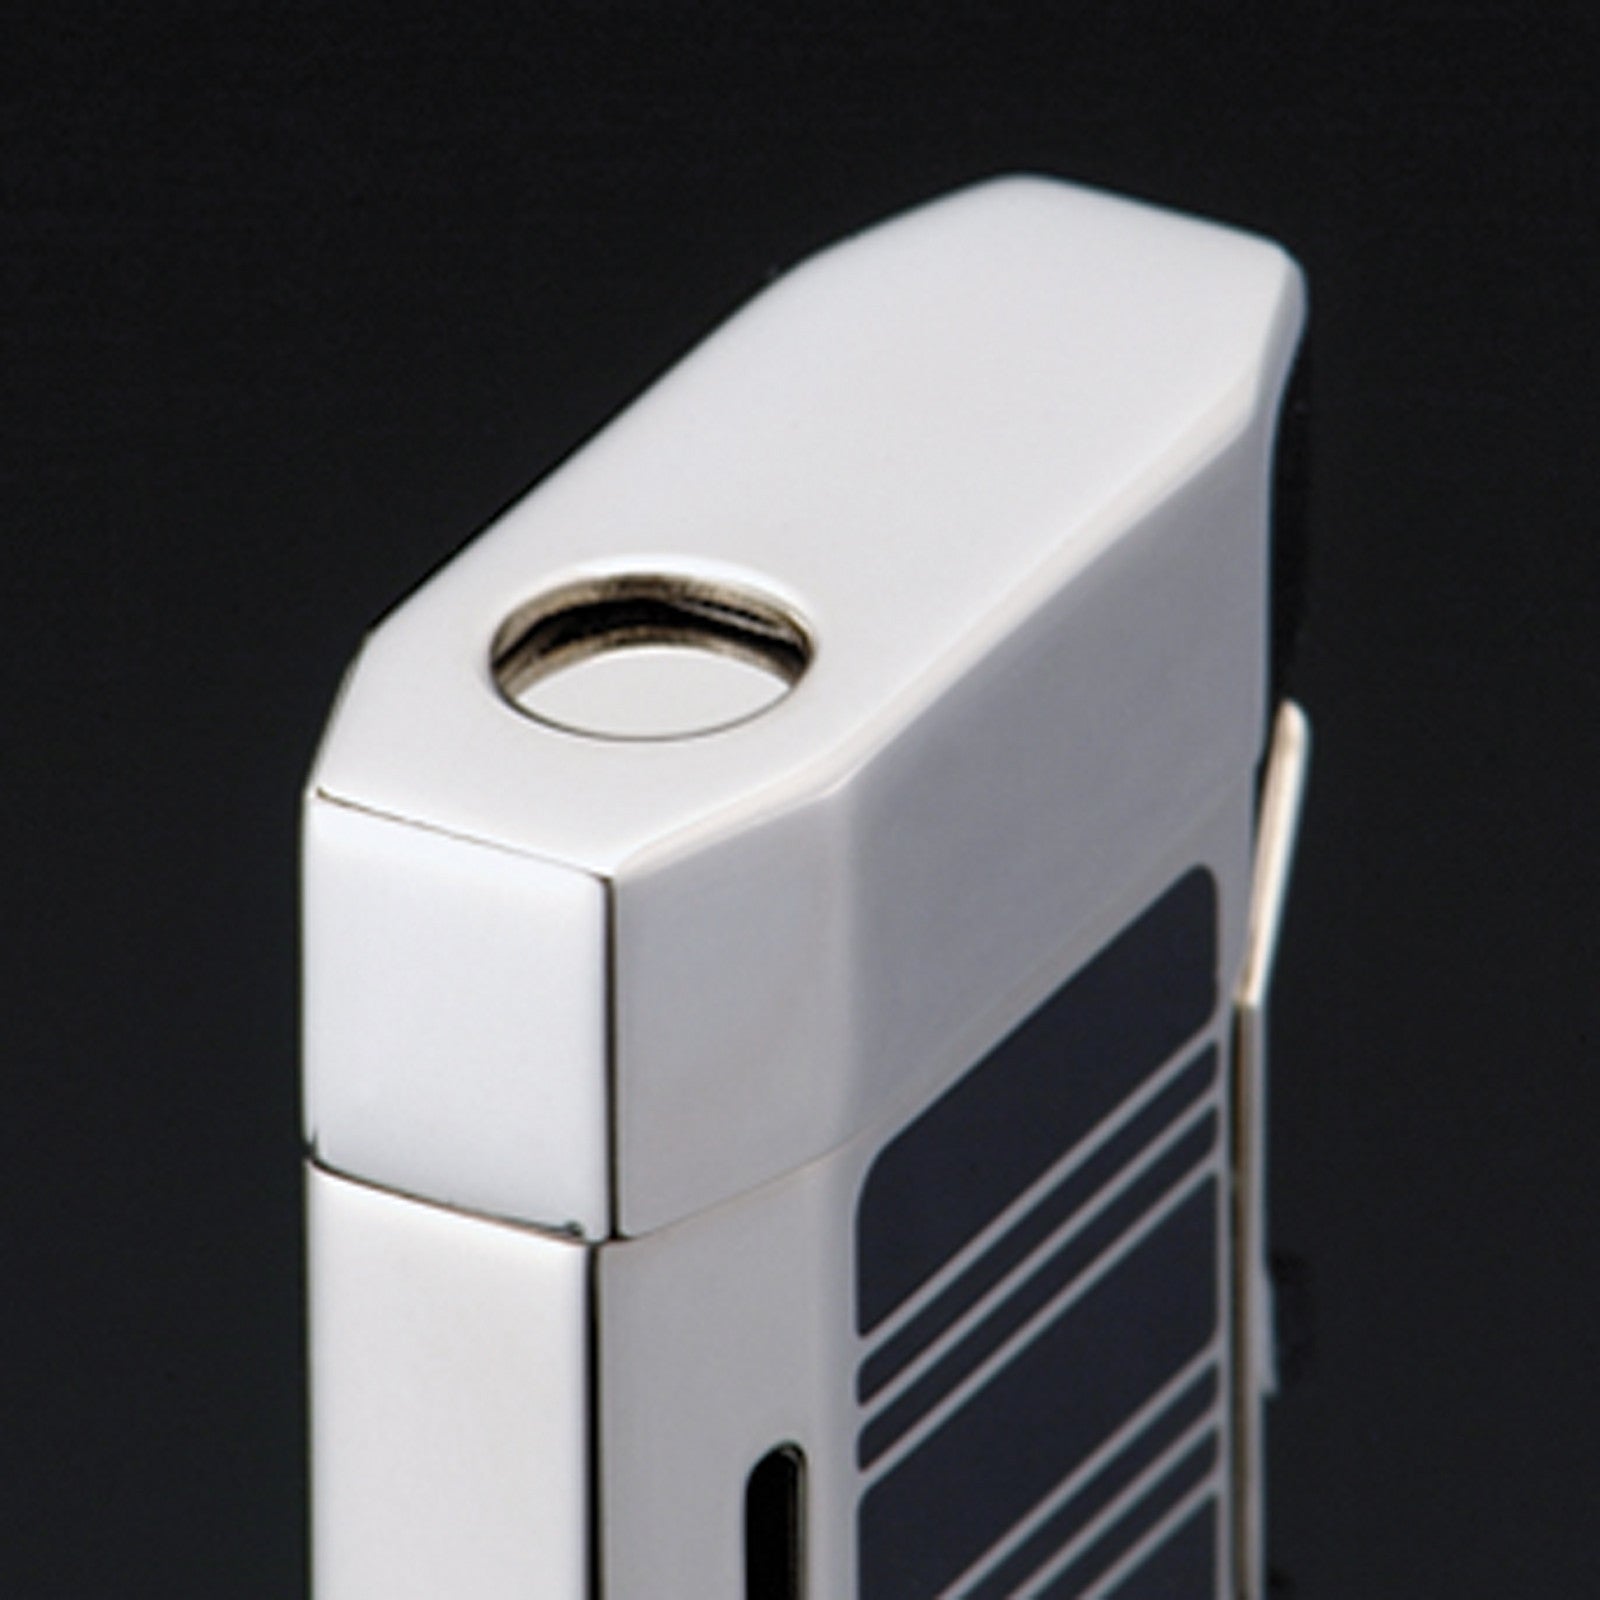 Sarome Torch Lighter BM5-04 Silver/black epoxy resin inlaid